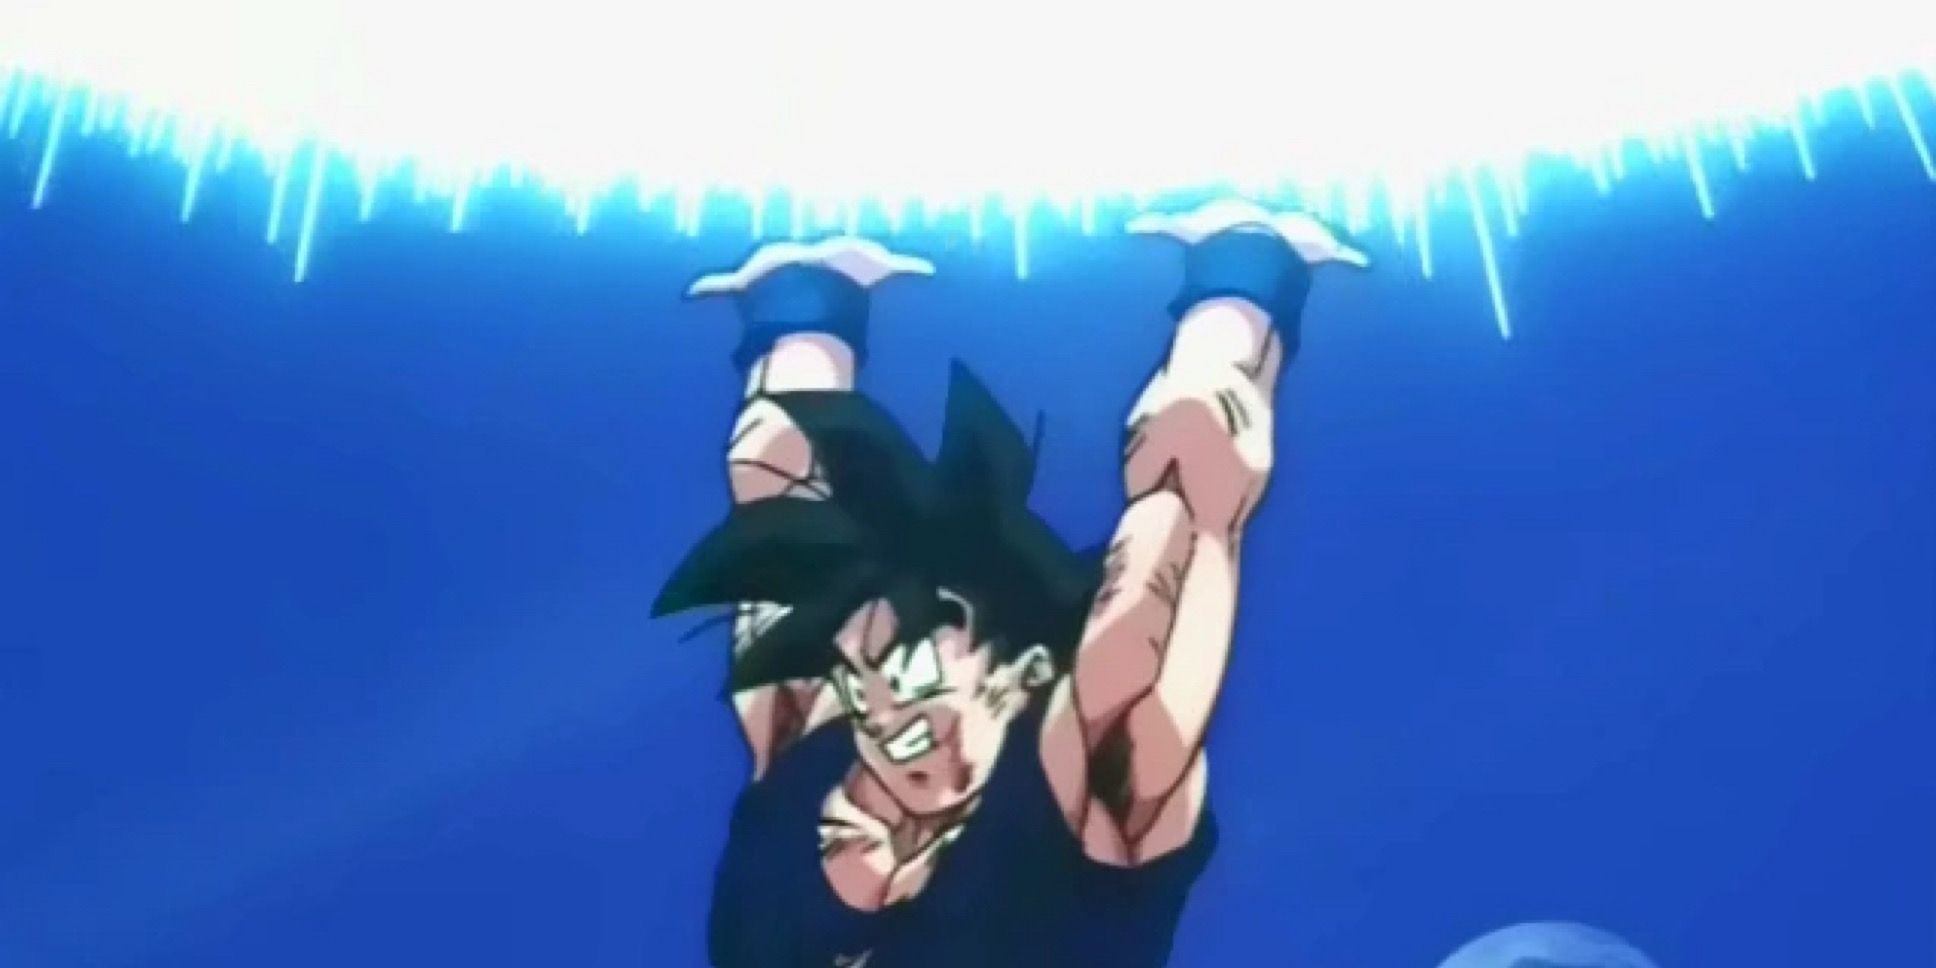 Goku charging a Spirit Bomb during the Buu Saga in Dragon Ball Z.